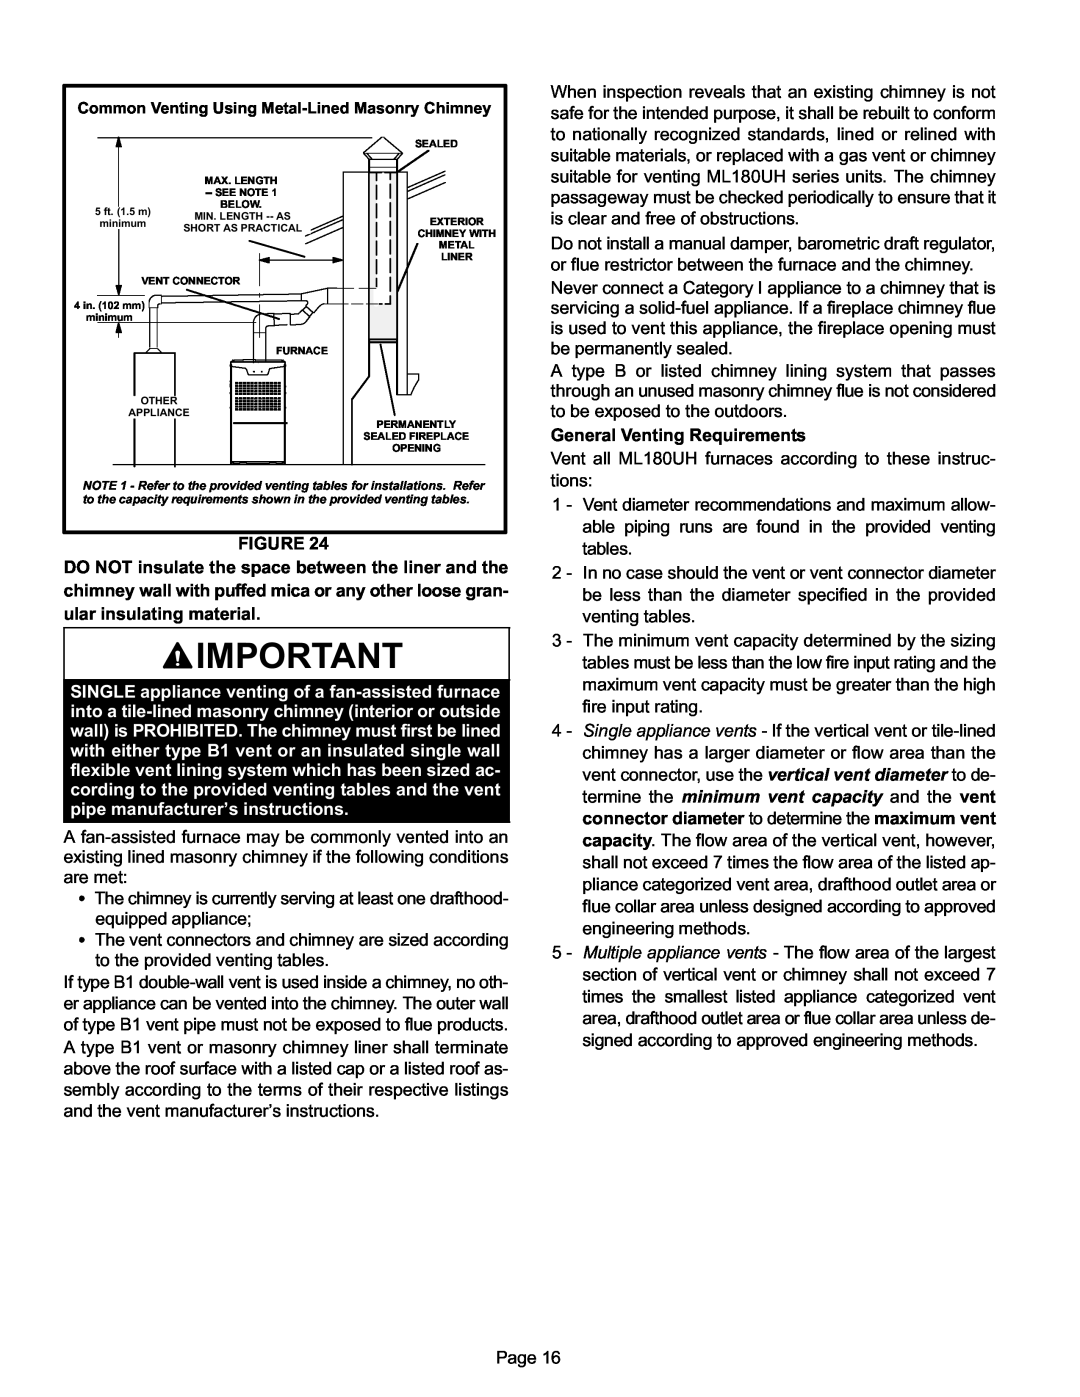 Lennox International Inc Merit Series Gas Furnace installation instructions 